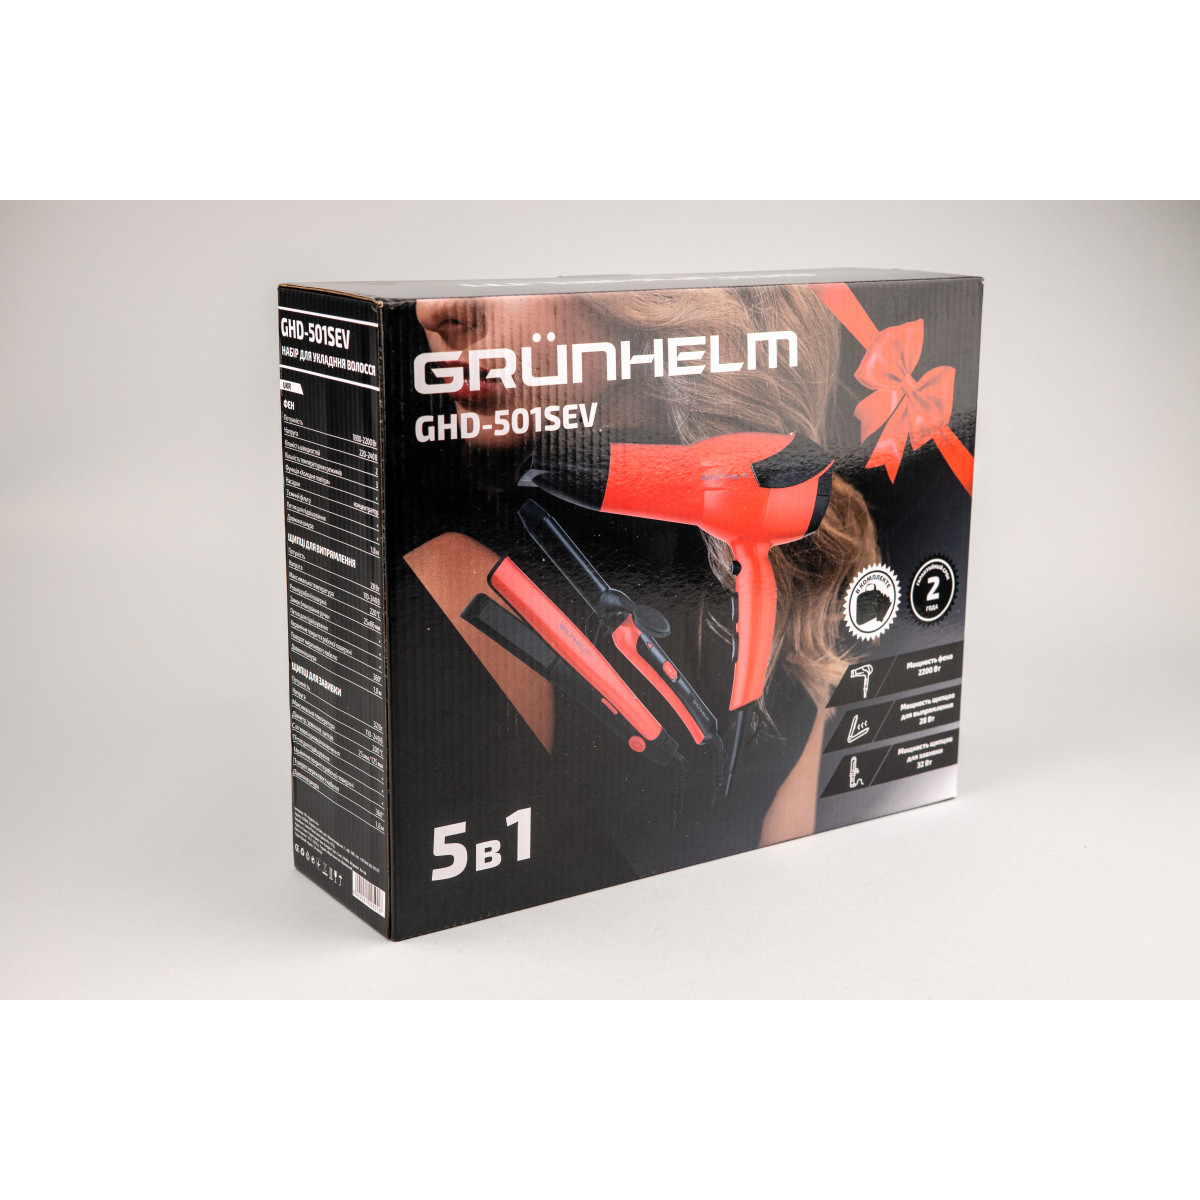 Набор для укладки волос GHD-501SEV Grunhelm